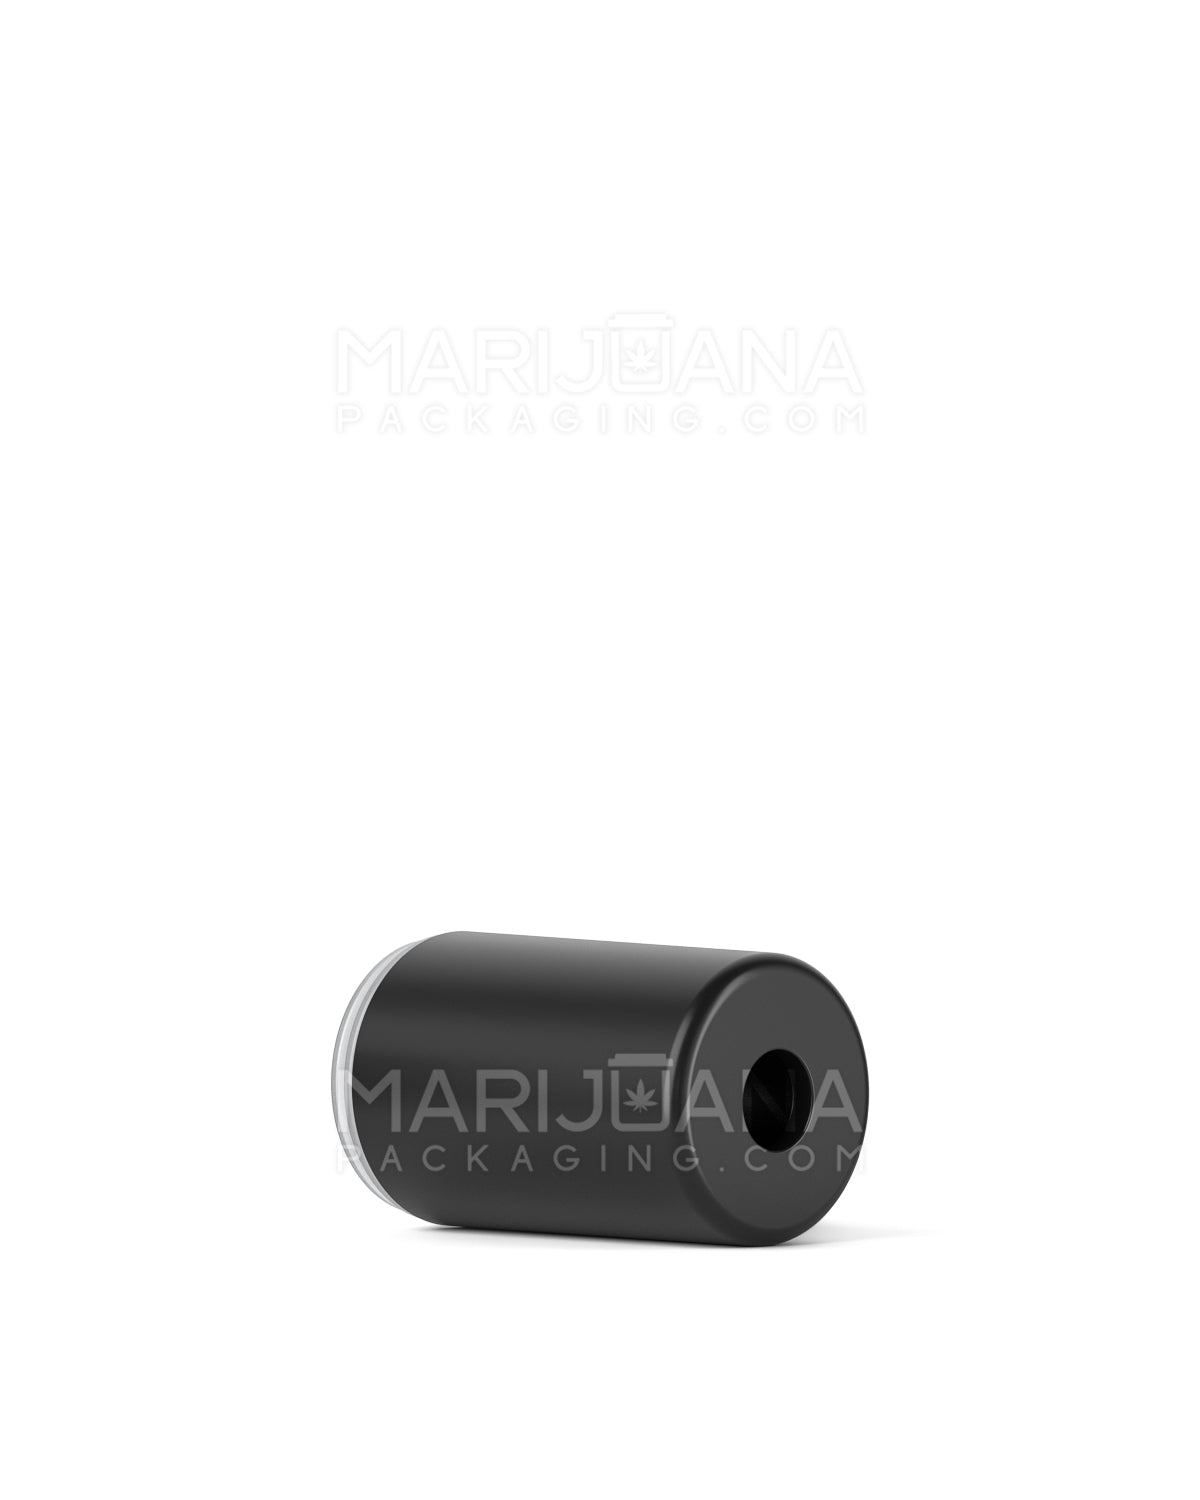 AVD | Barrel Vape Mouthpiece for Glass Cartridges | Black Plastic - Eazy Press - 600 Count - 5